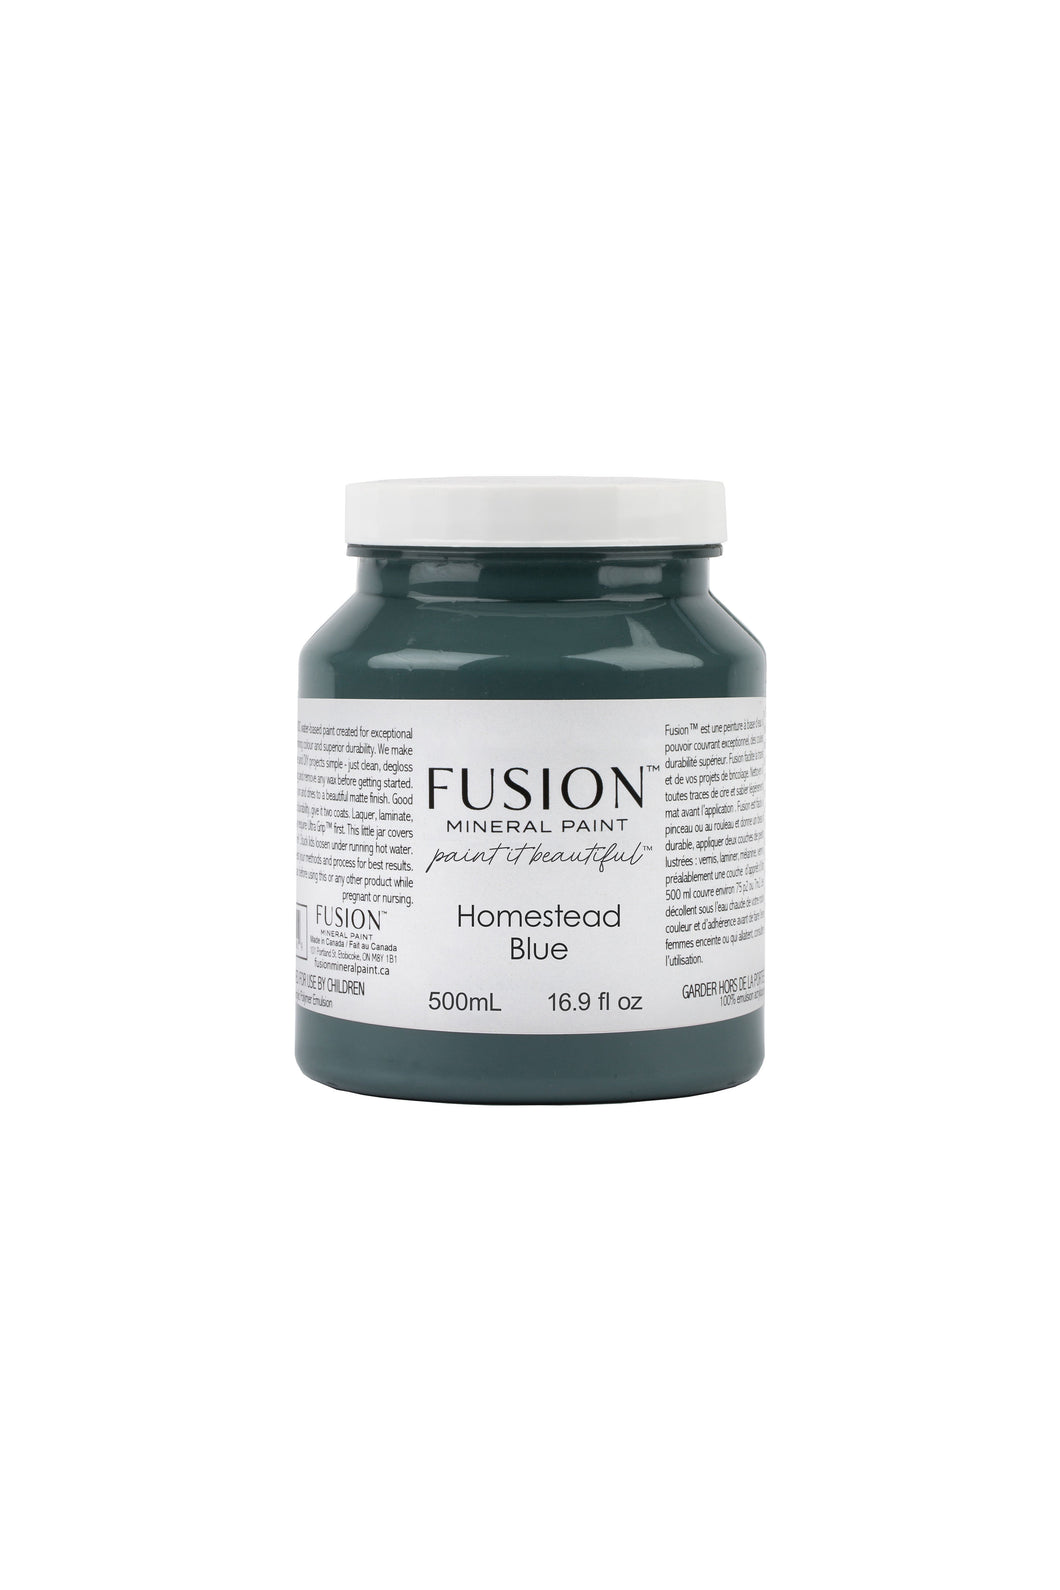 Fusion Mineral Paint - Homestead Blue 500 ml Jar